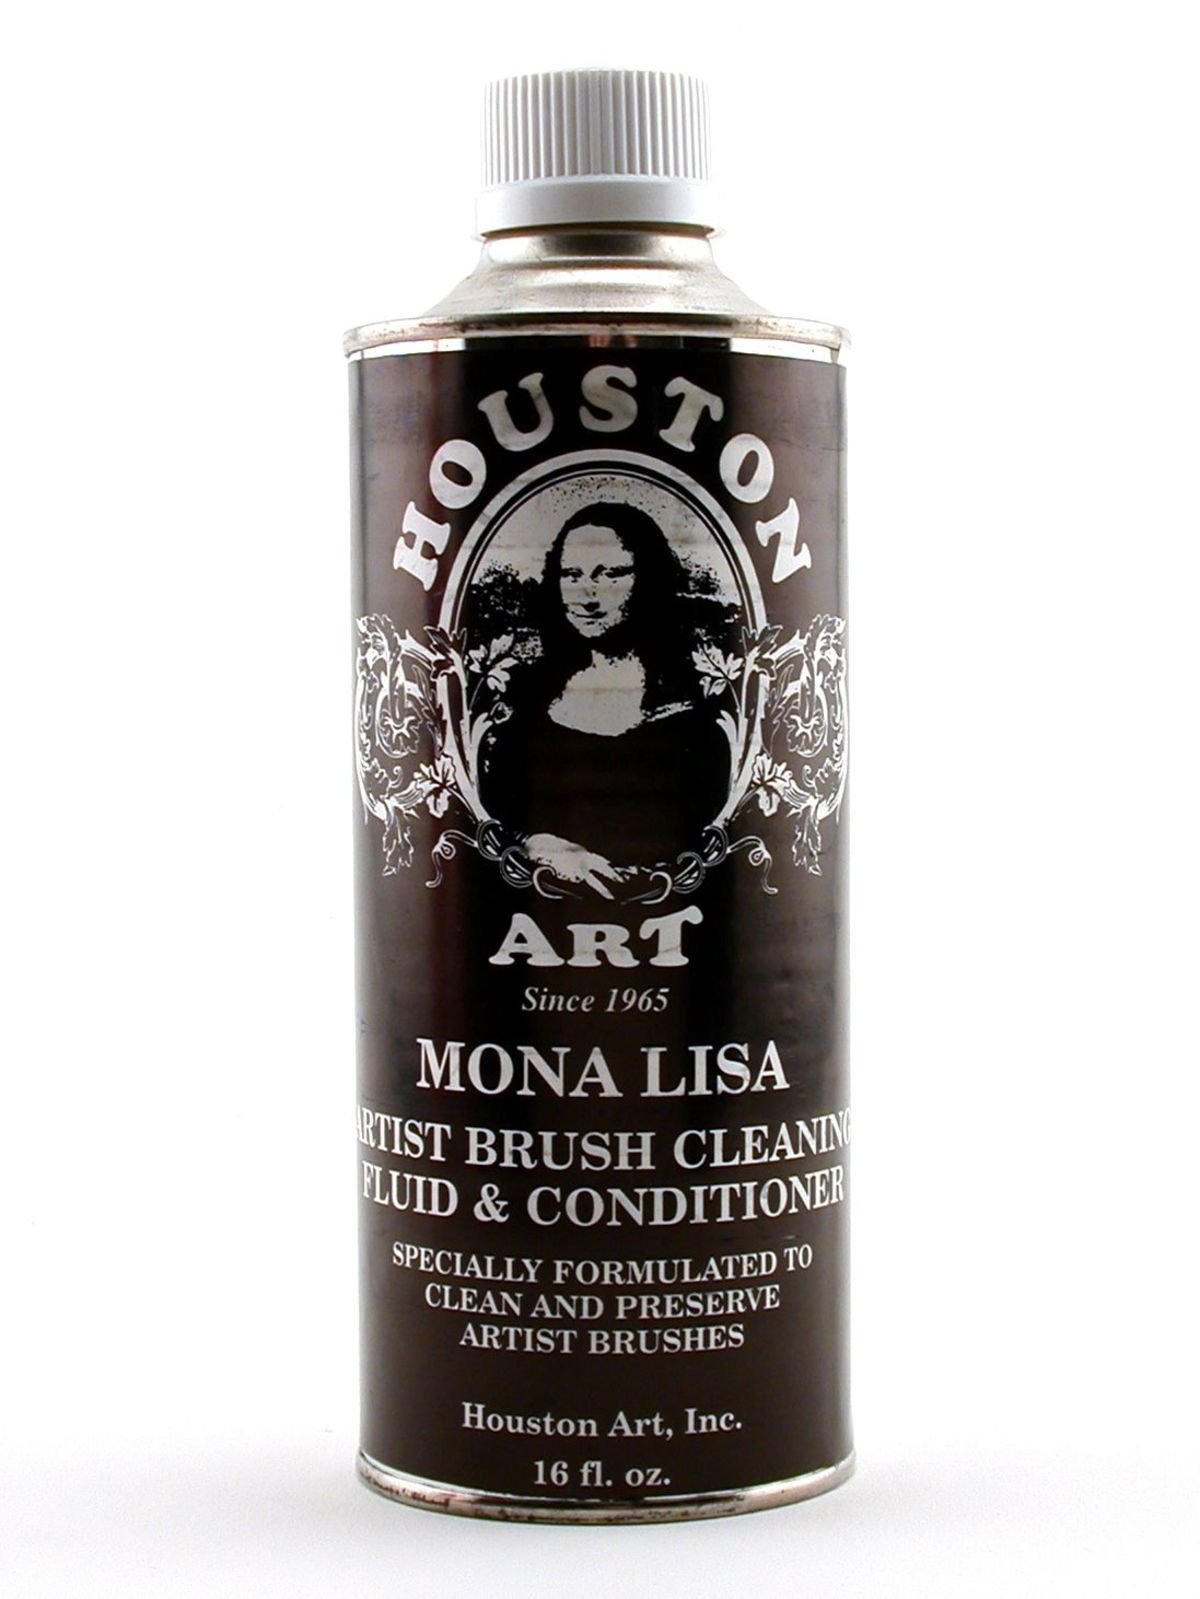 Mona Lisa Brush Cleaning Fluid